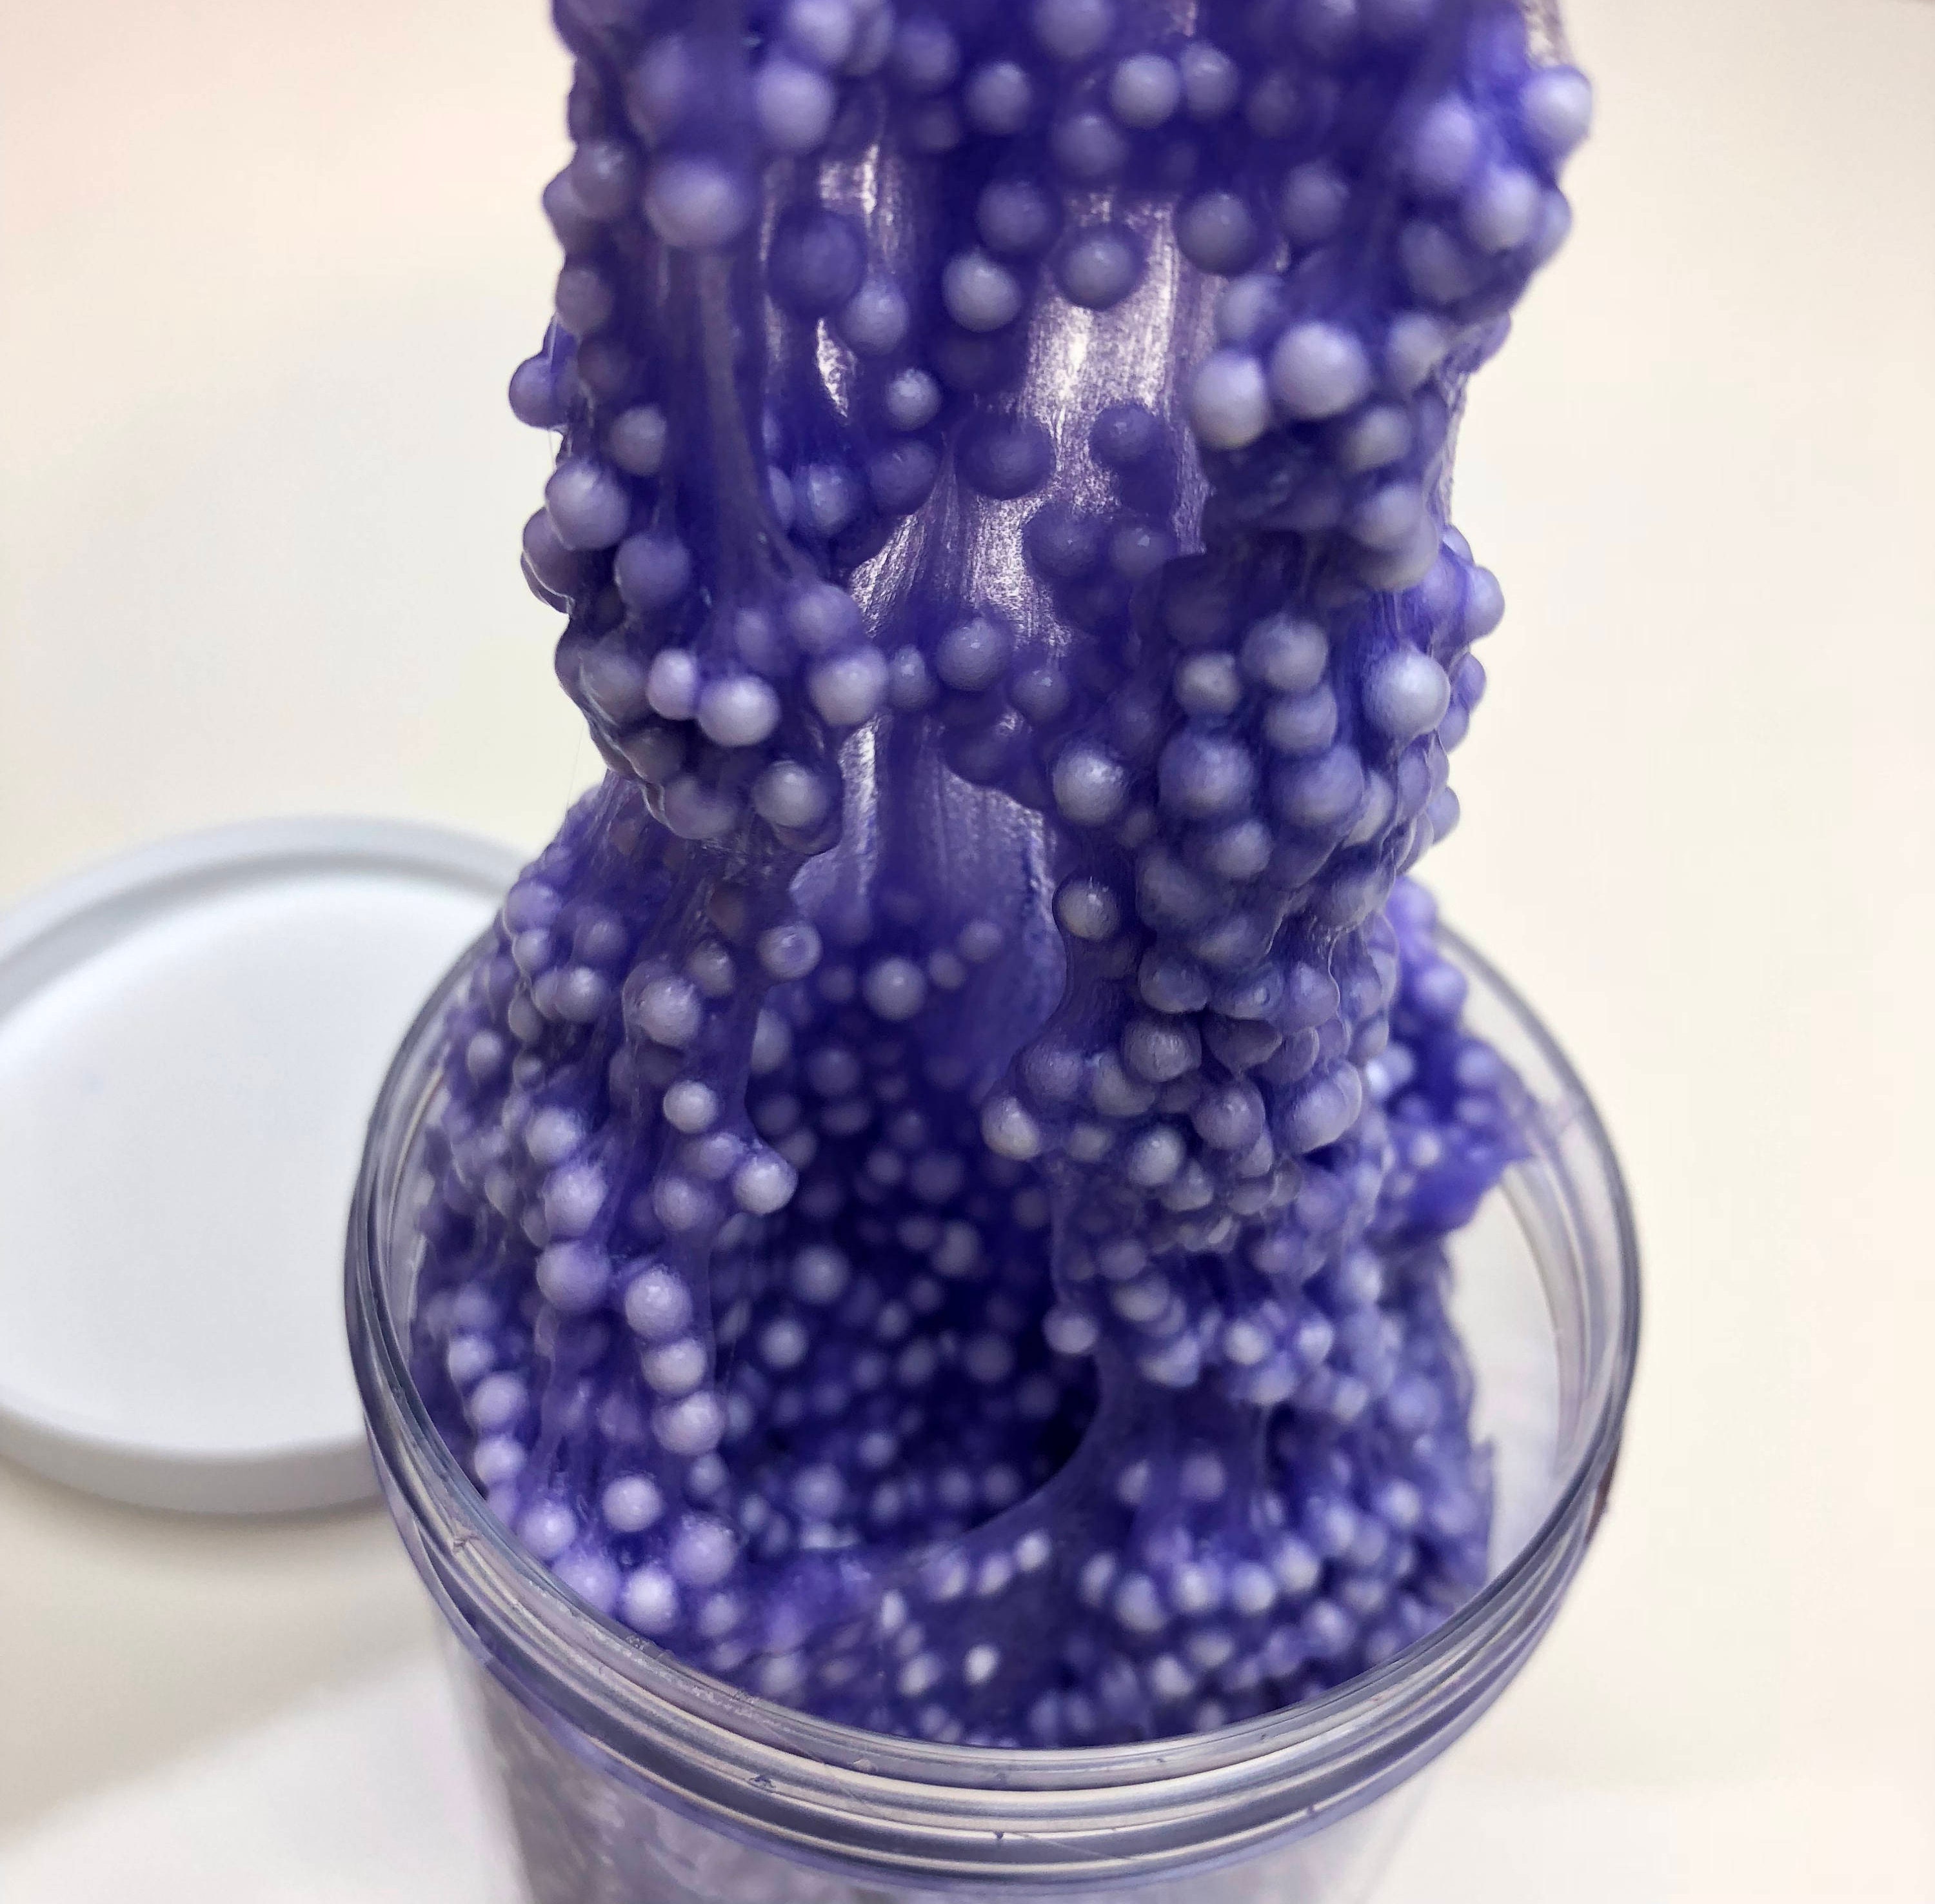 Purple Sweetarts Floam Slime Clear Based Slime W/ Foam Beads